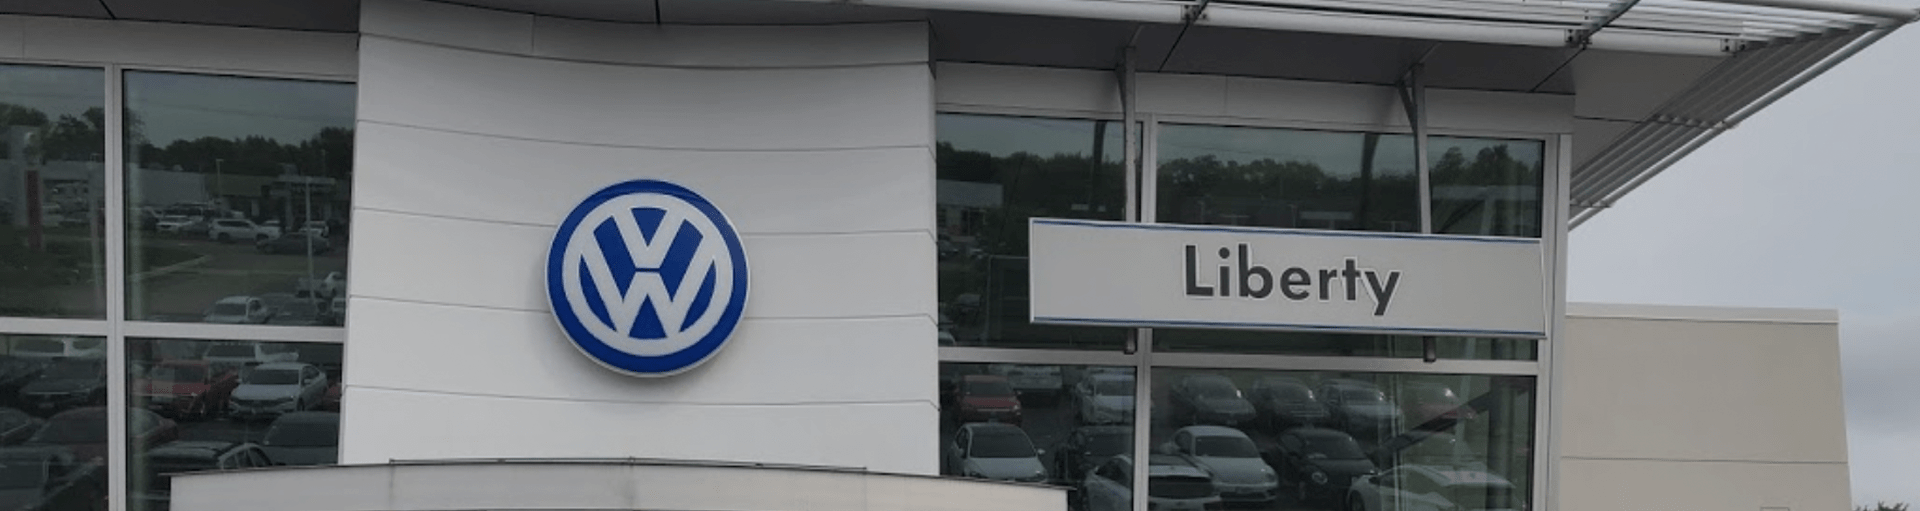 Libertyville Volkswagen Two-Wheel Alignment Service